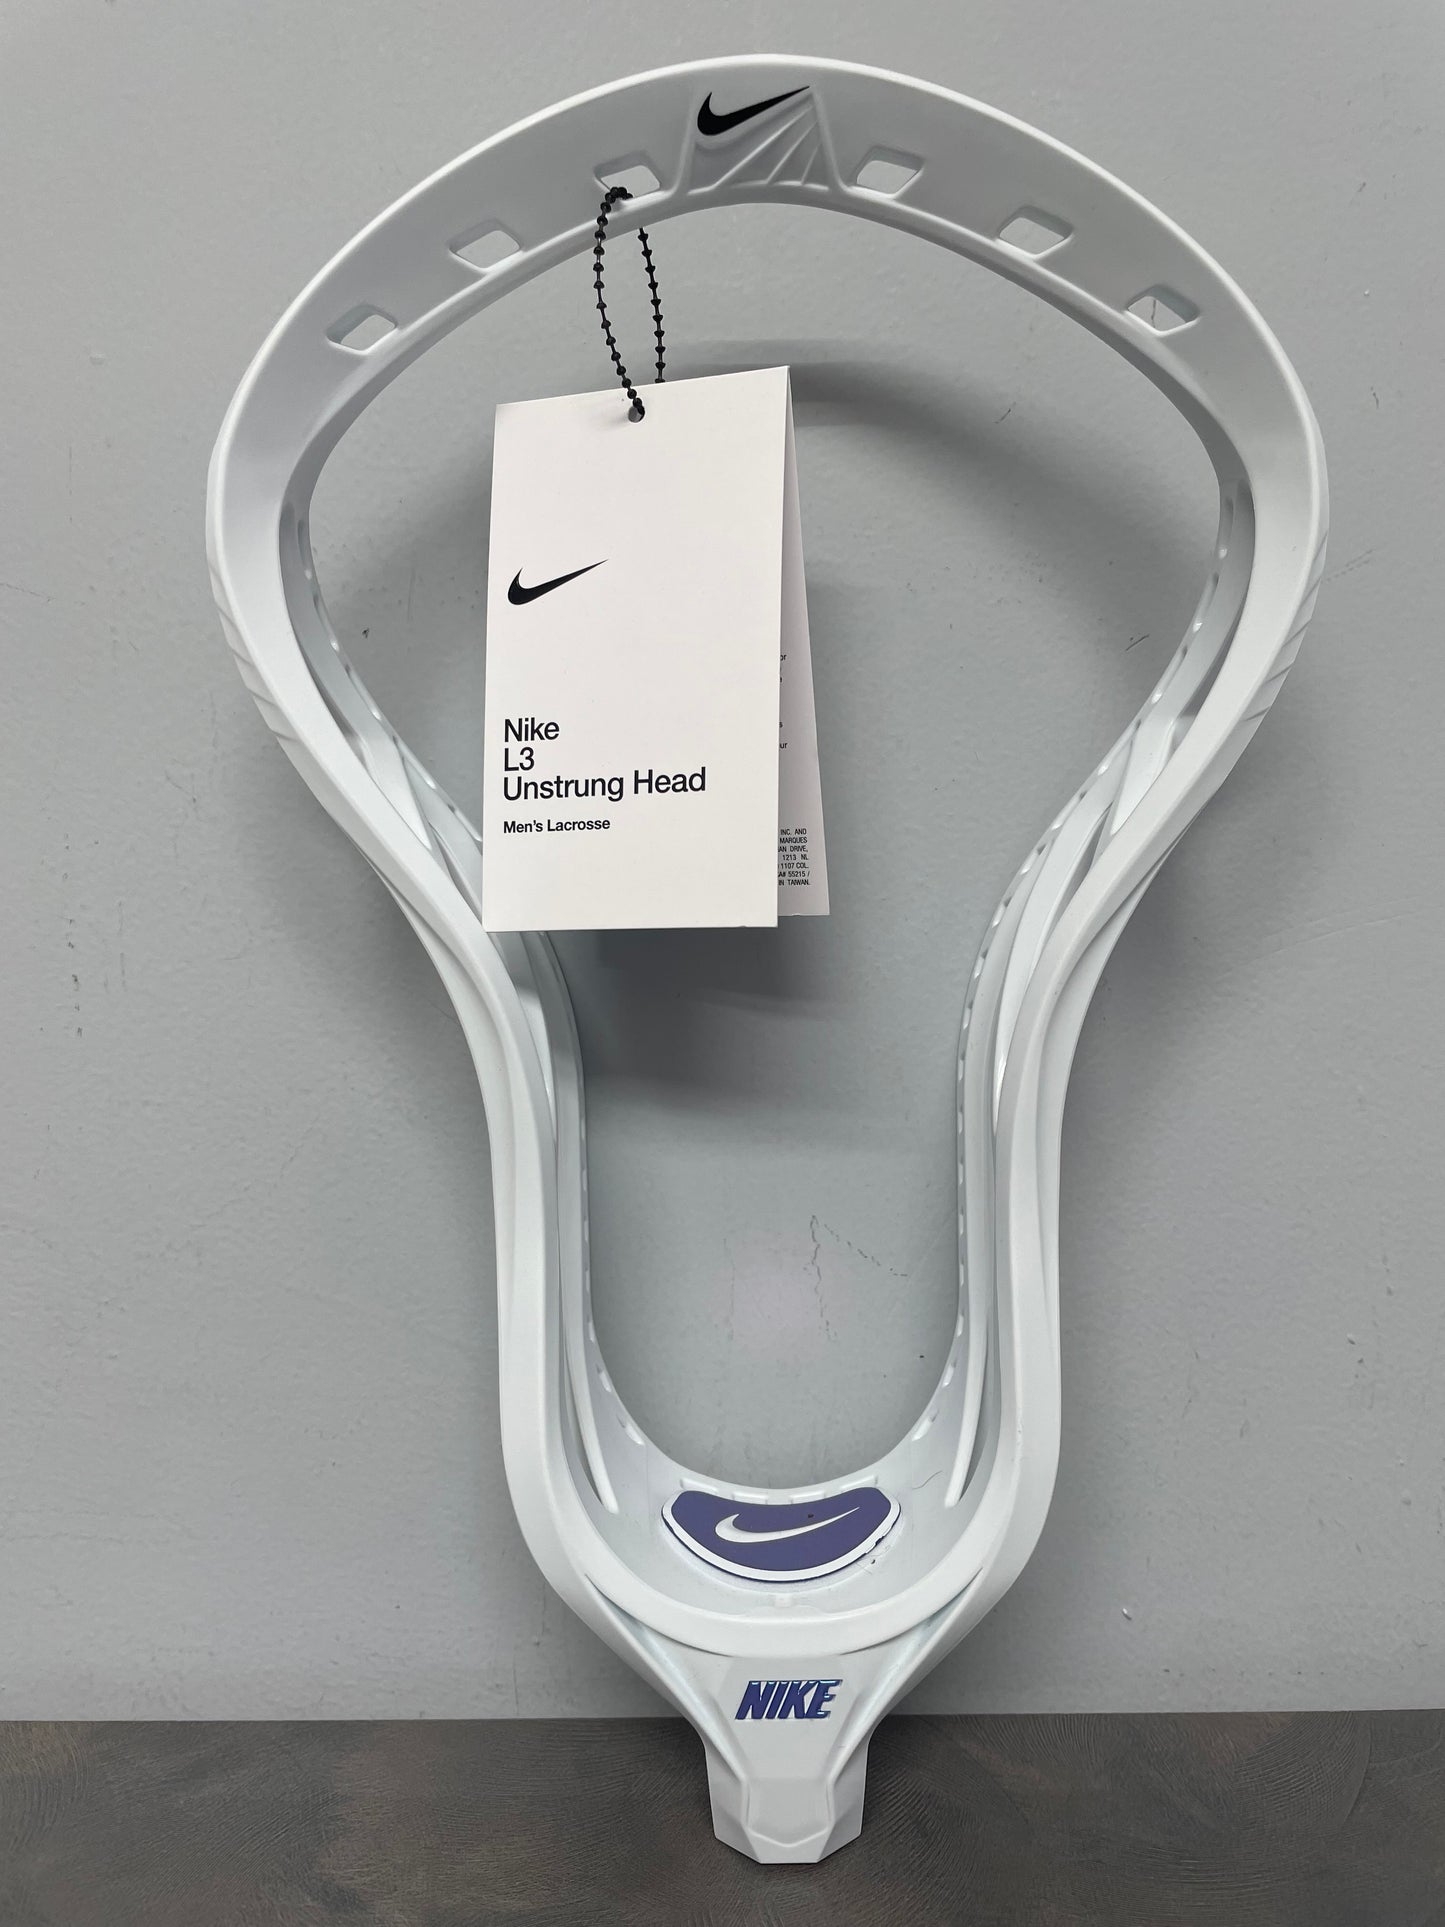 Nike Lakota 3 (L3) custom strung lacrosse head